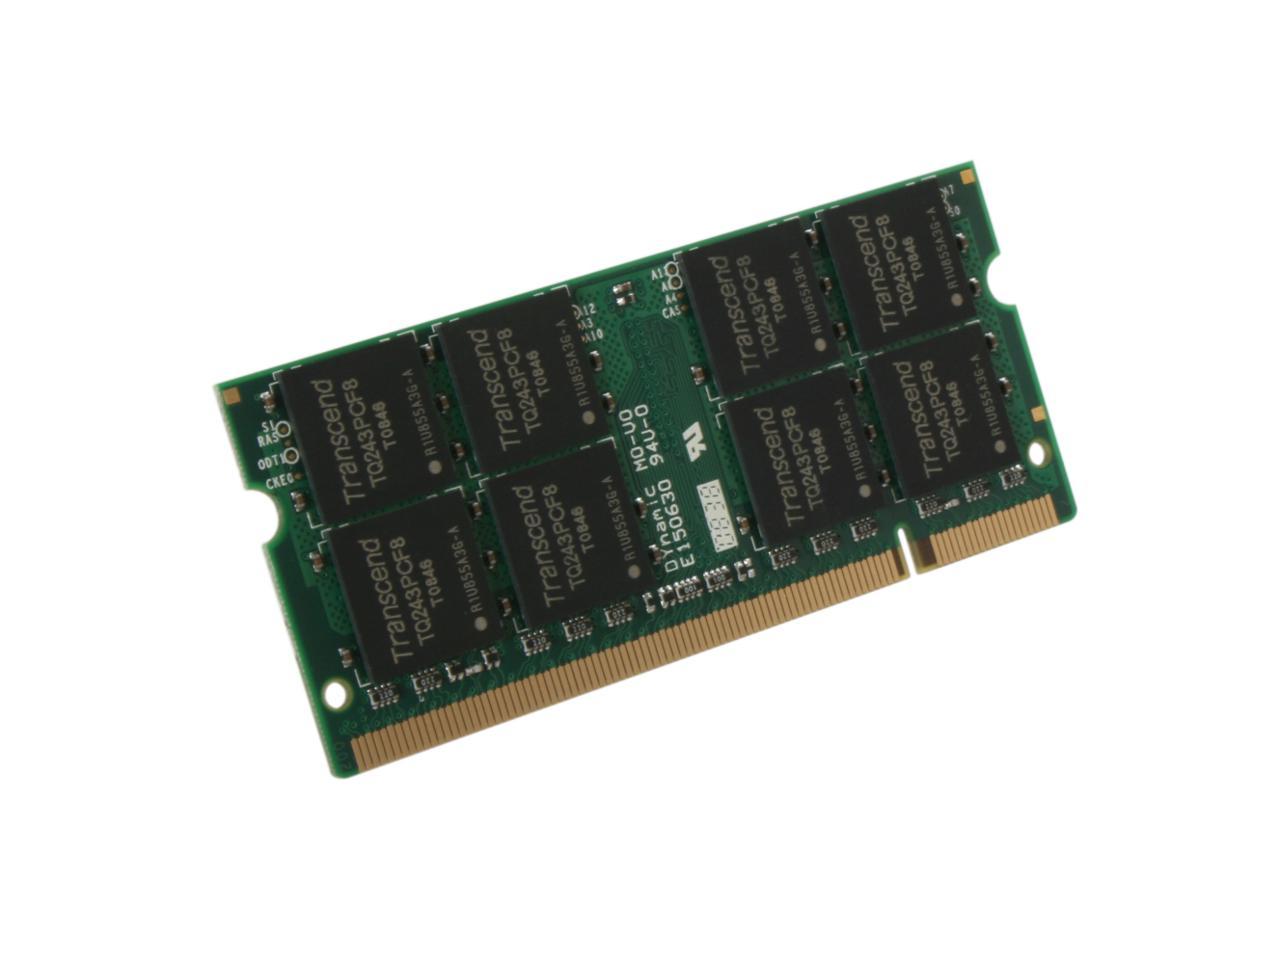 Transcend 2GB 200-Pin DDR2 SO-DIMM DDR2 667 (PC2 5300) Laptop Memory Model JM667QSU-2G